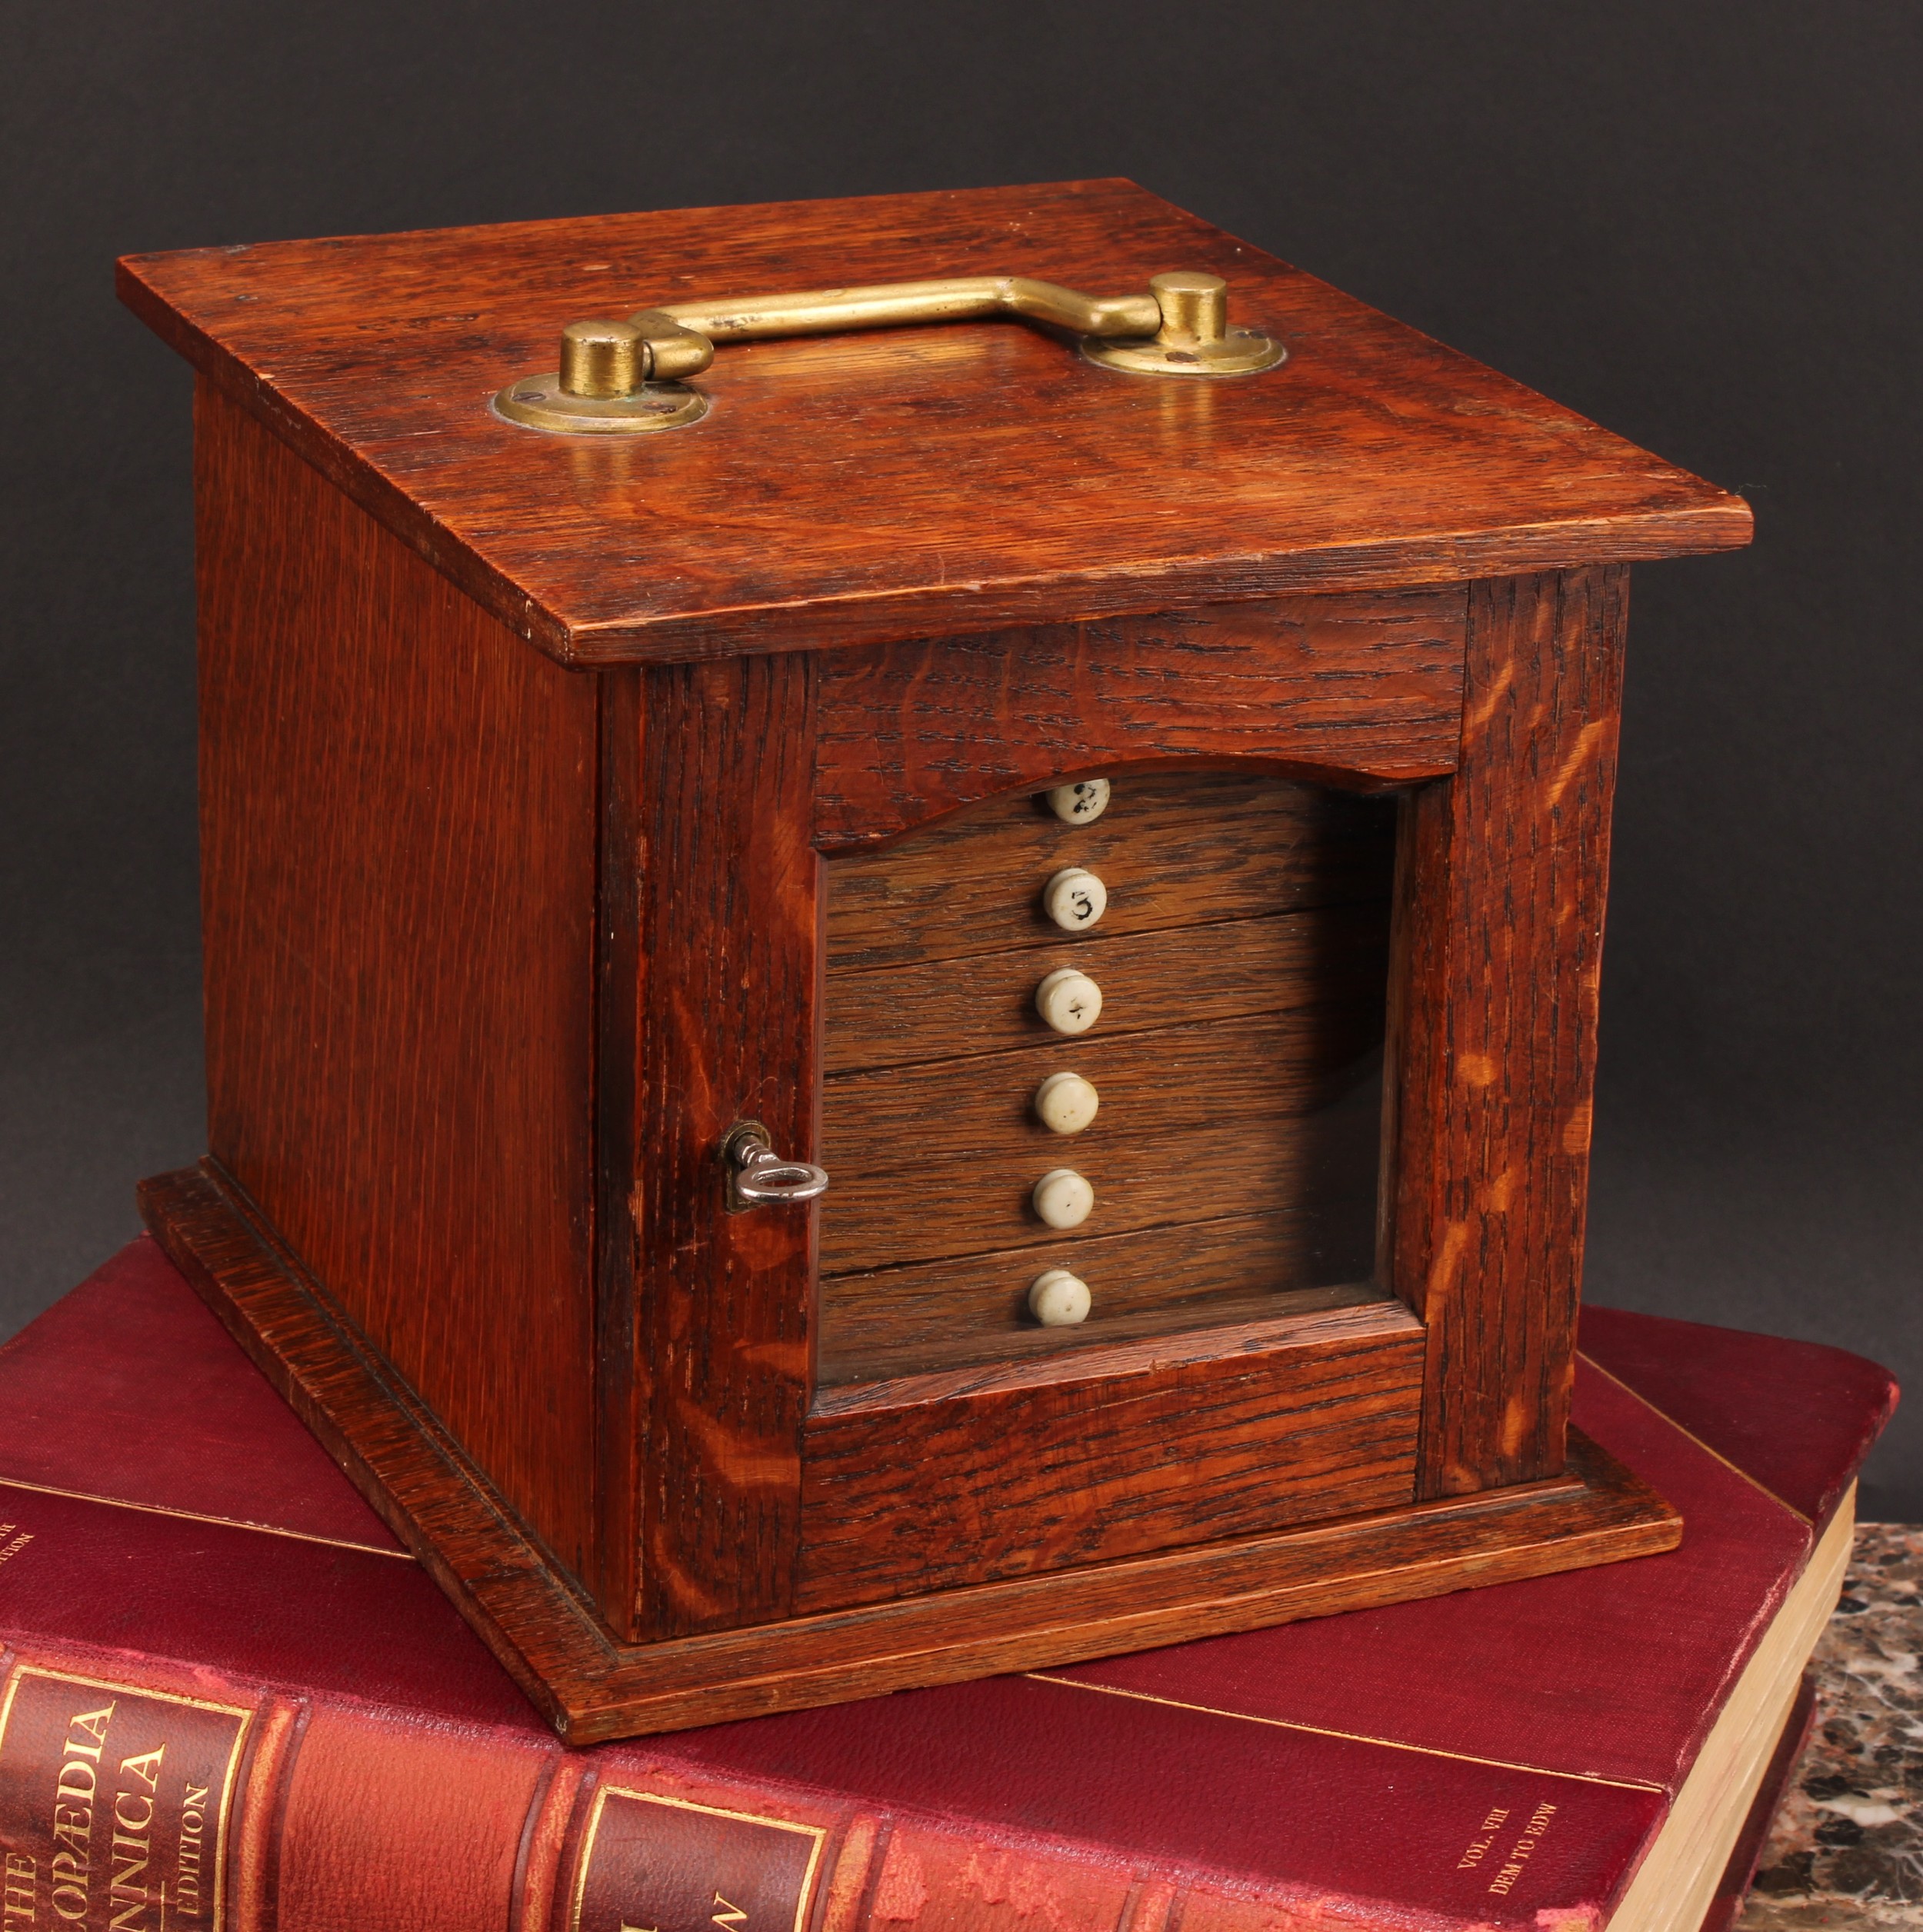 Numismatics - An Edwardian Arts and Crafts oak coin cabinet, the oversailing rectangular top with